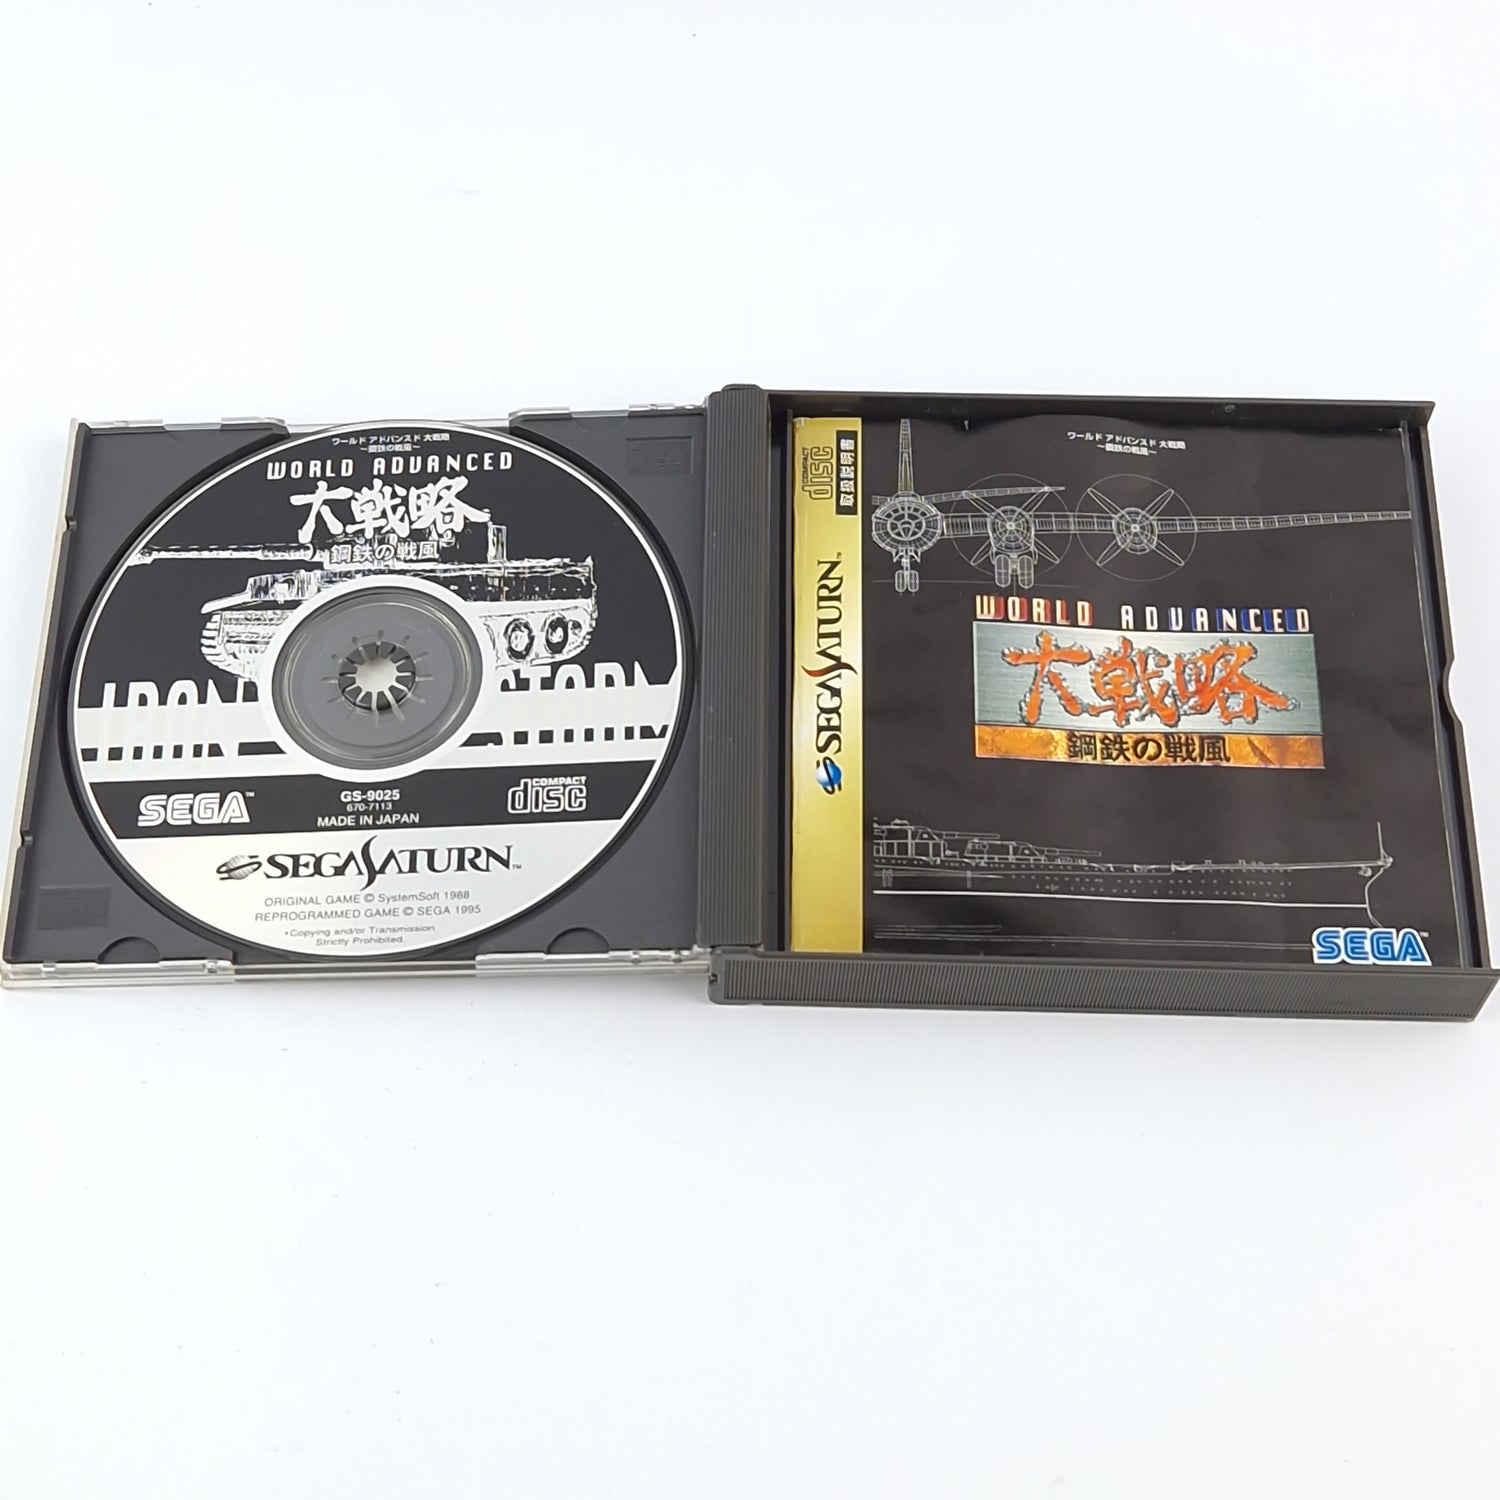 Sega Saturn Spiel : World Advanced - CD Anleitung OVP / NTSC-J JAPAN Game